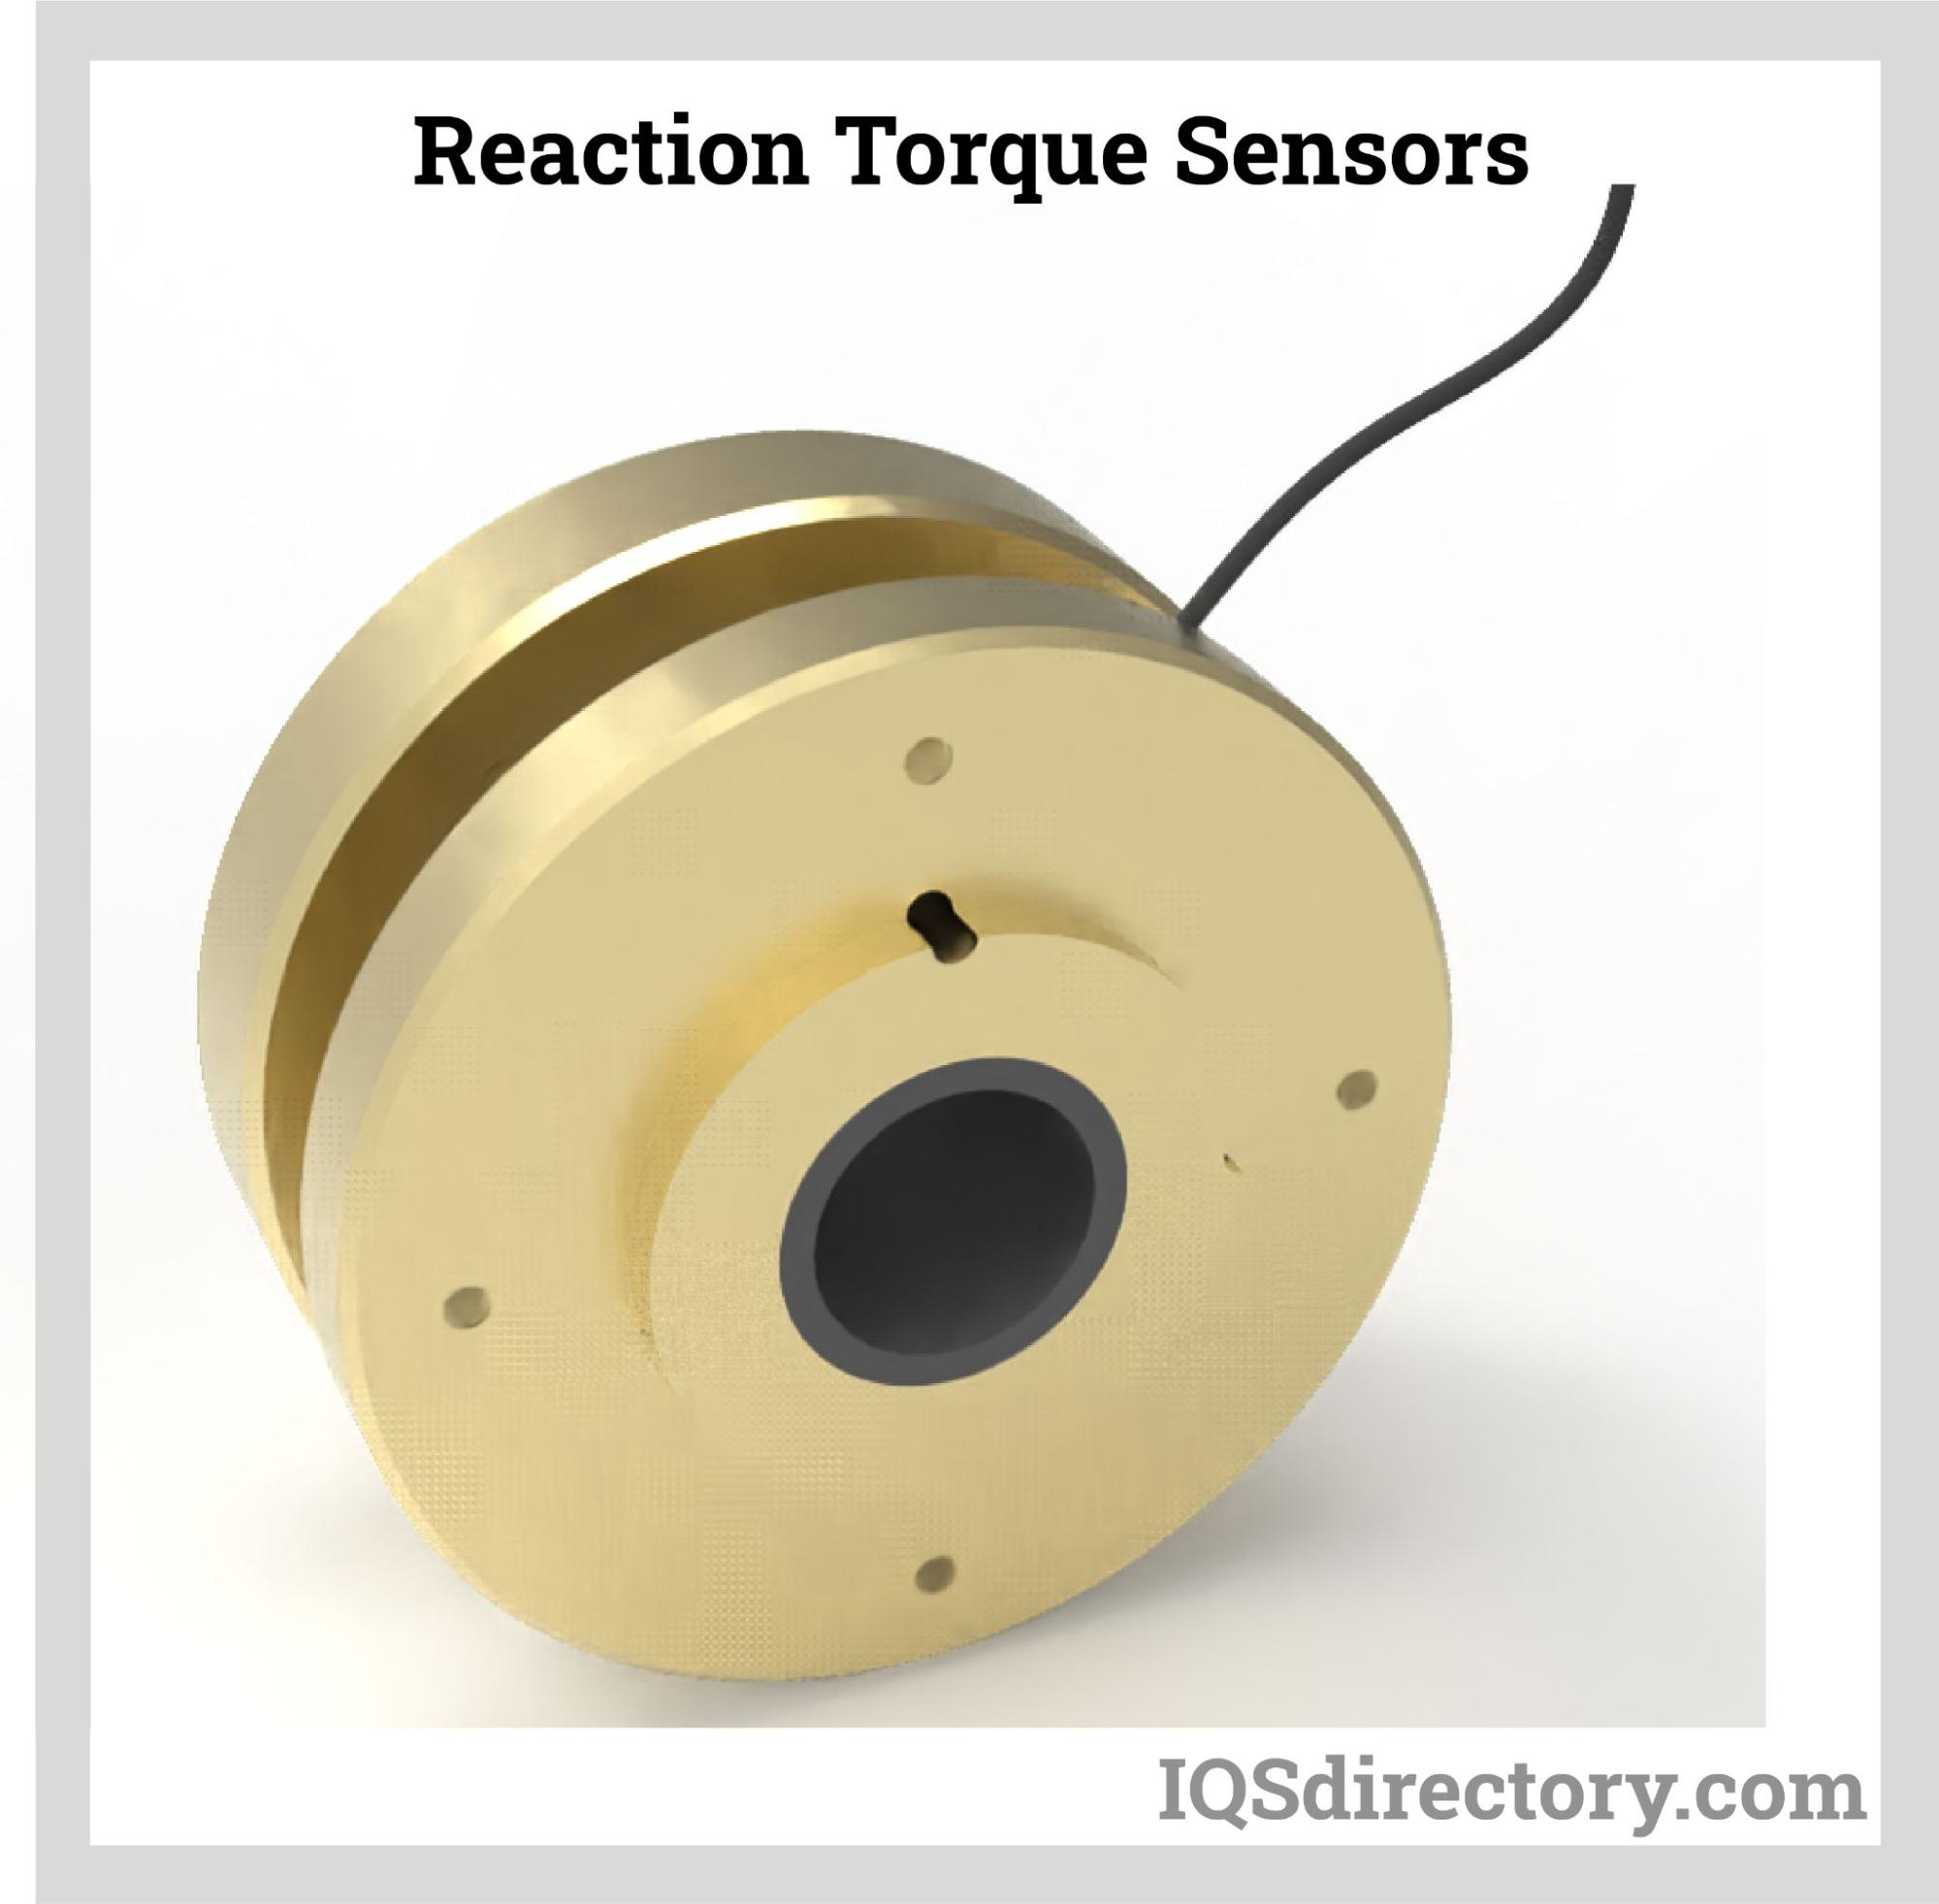 Reaction Torque Sensors